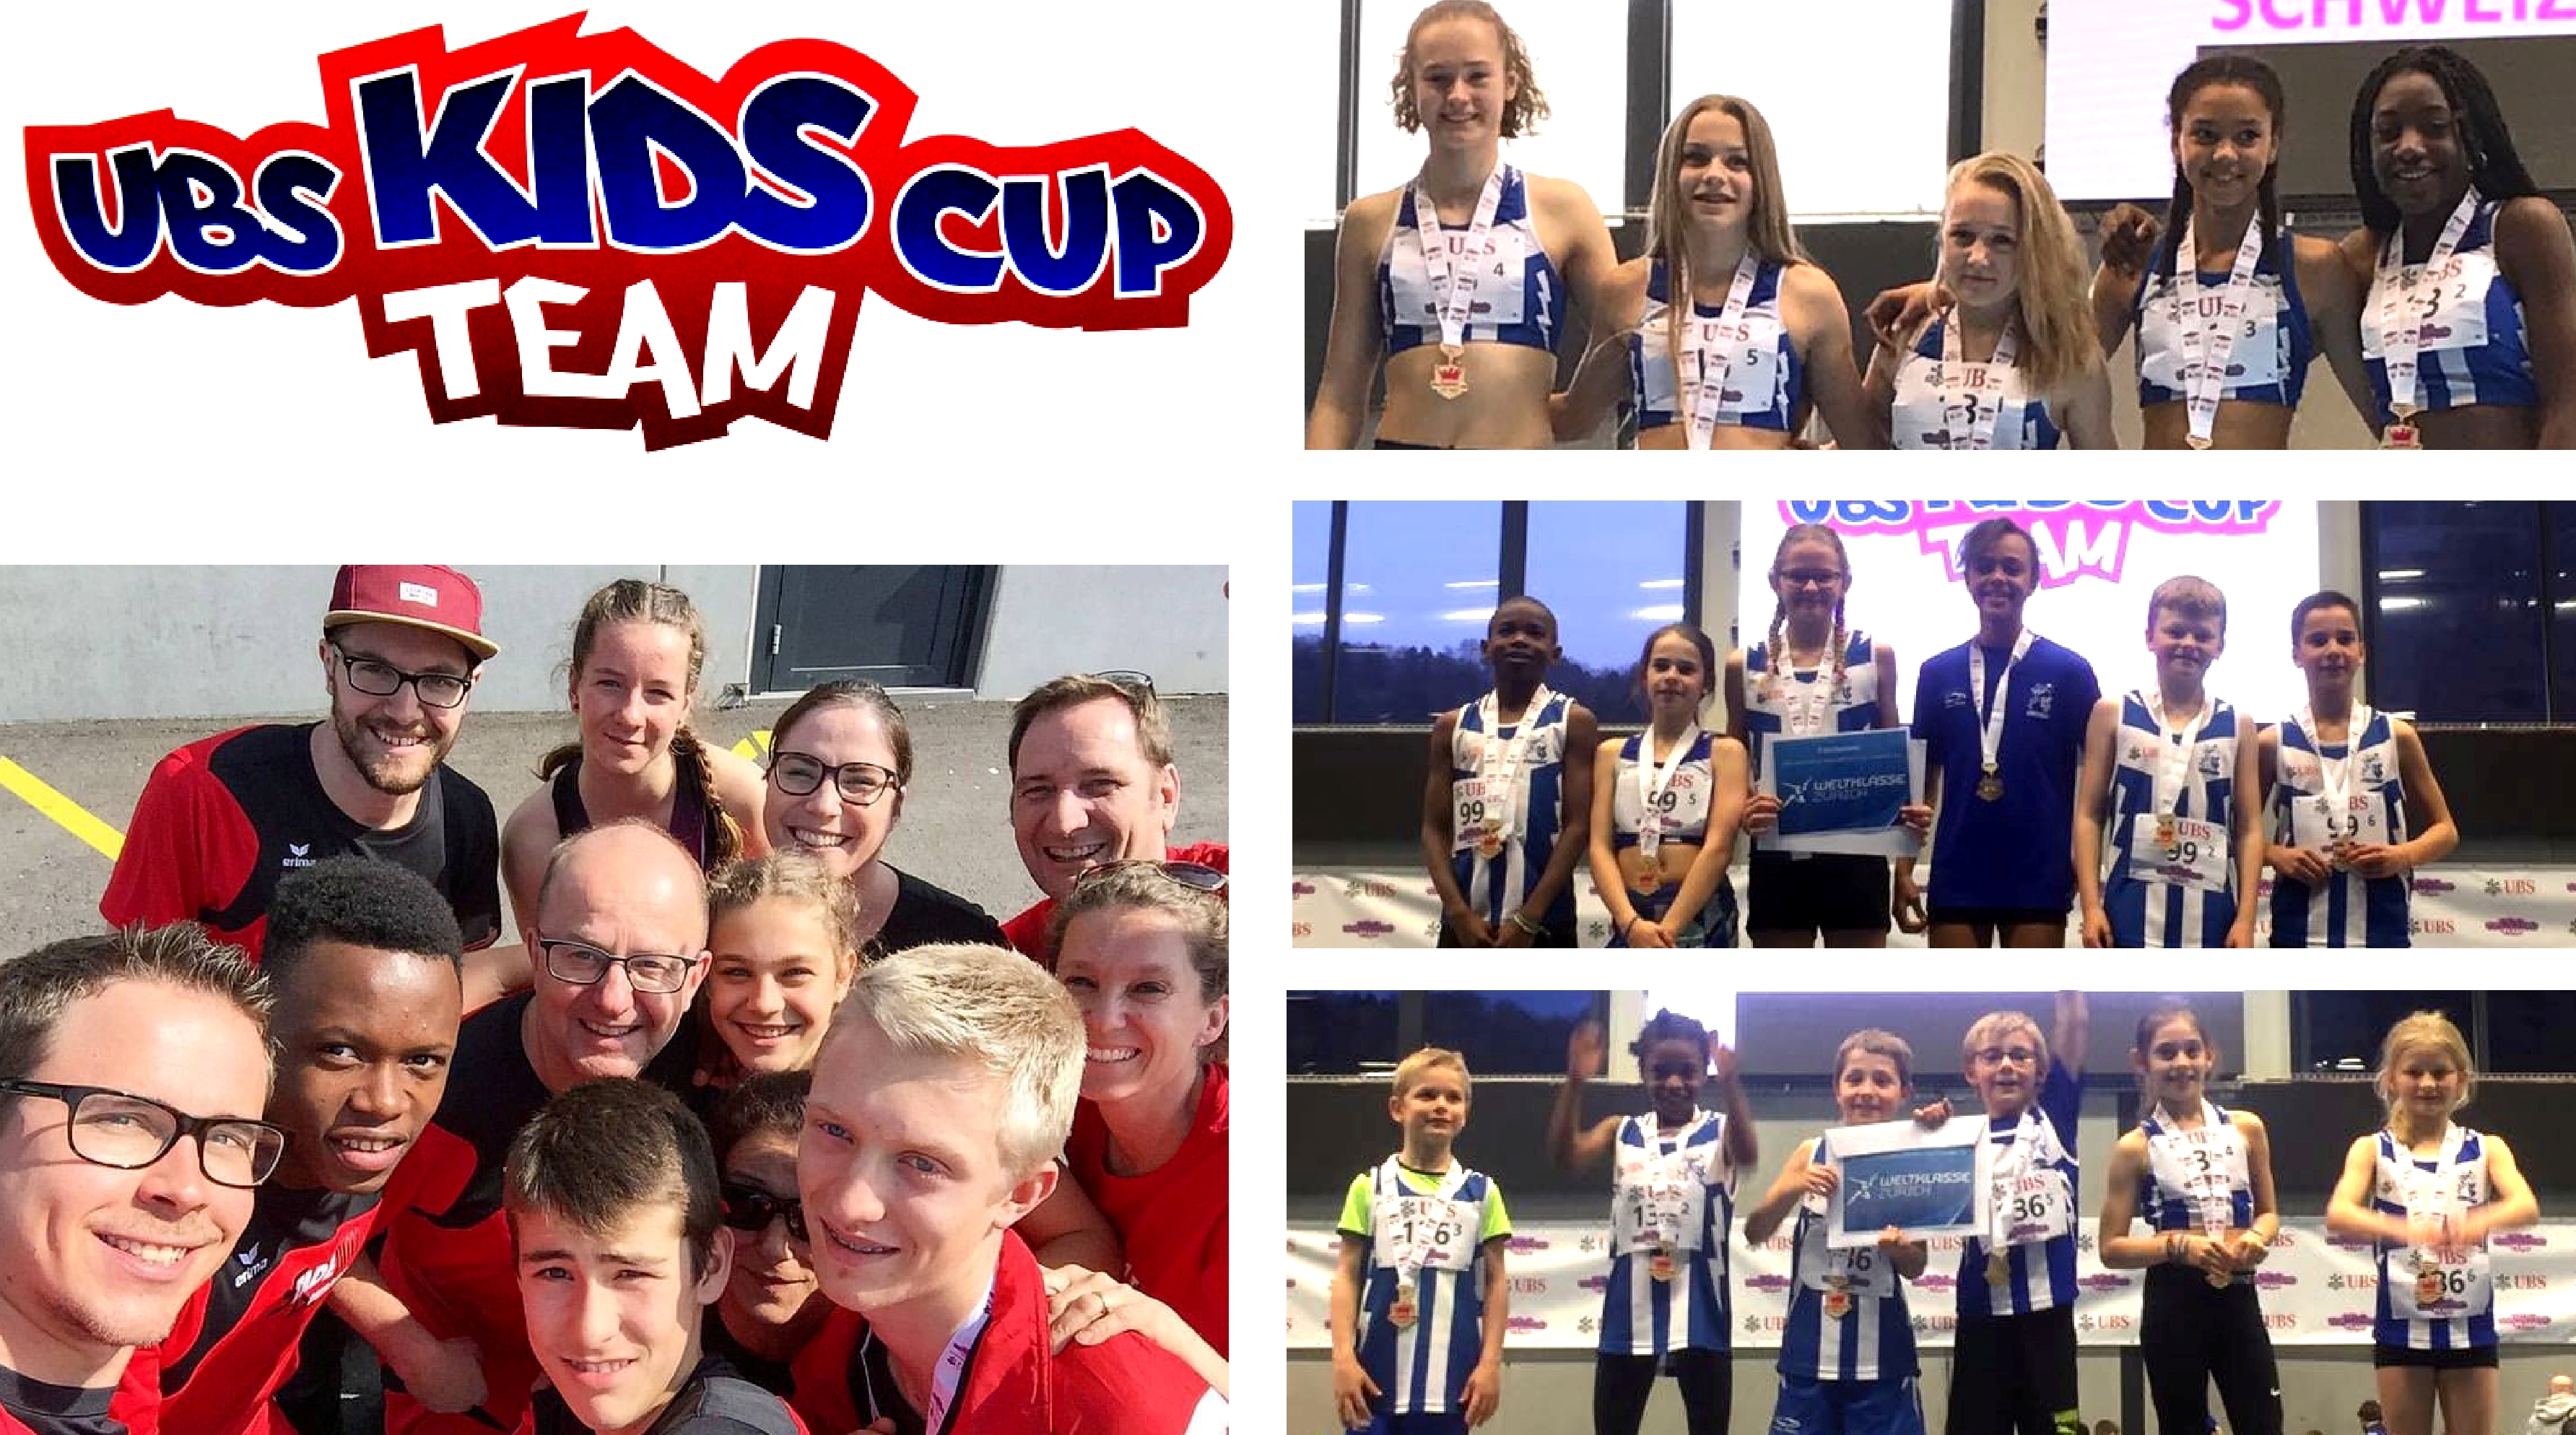 UBS Kids Cup Team à Untersiggenthal